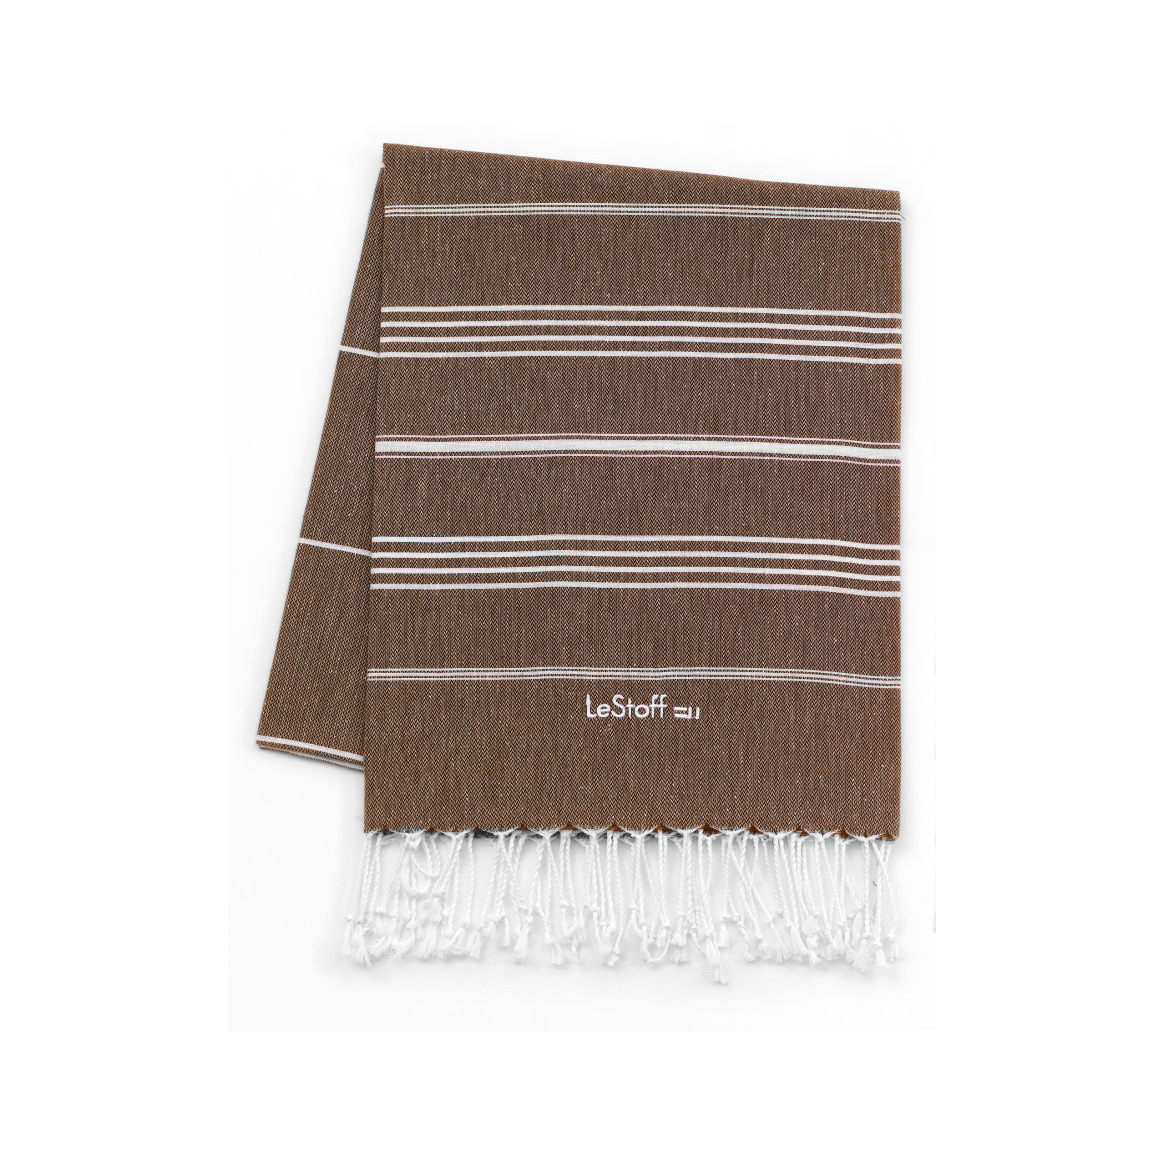 LeStoff Towel - Brown